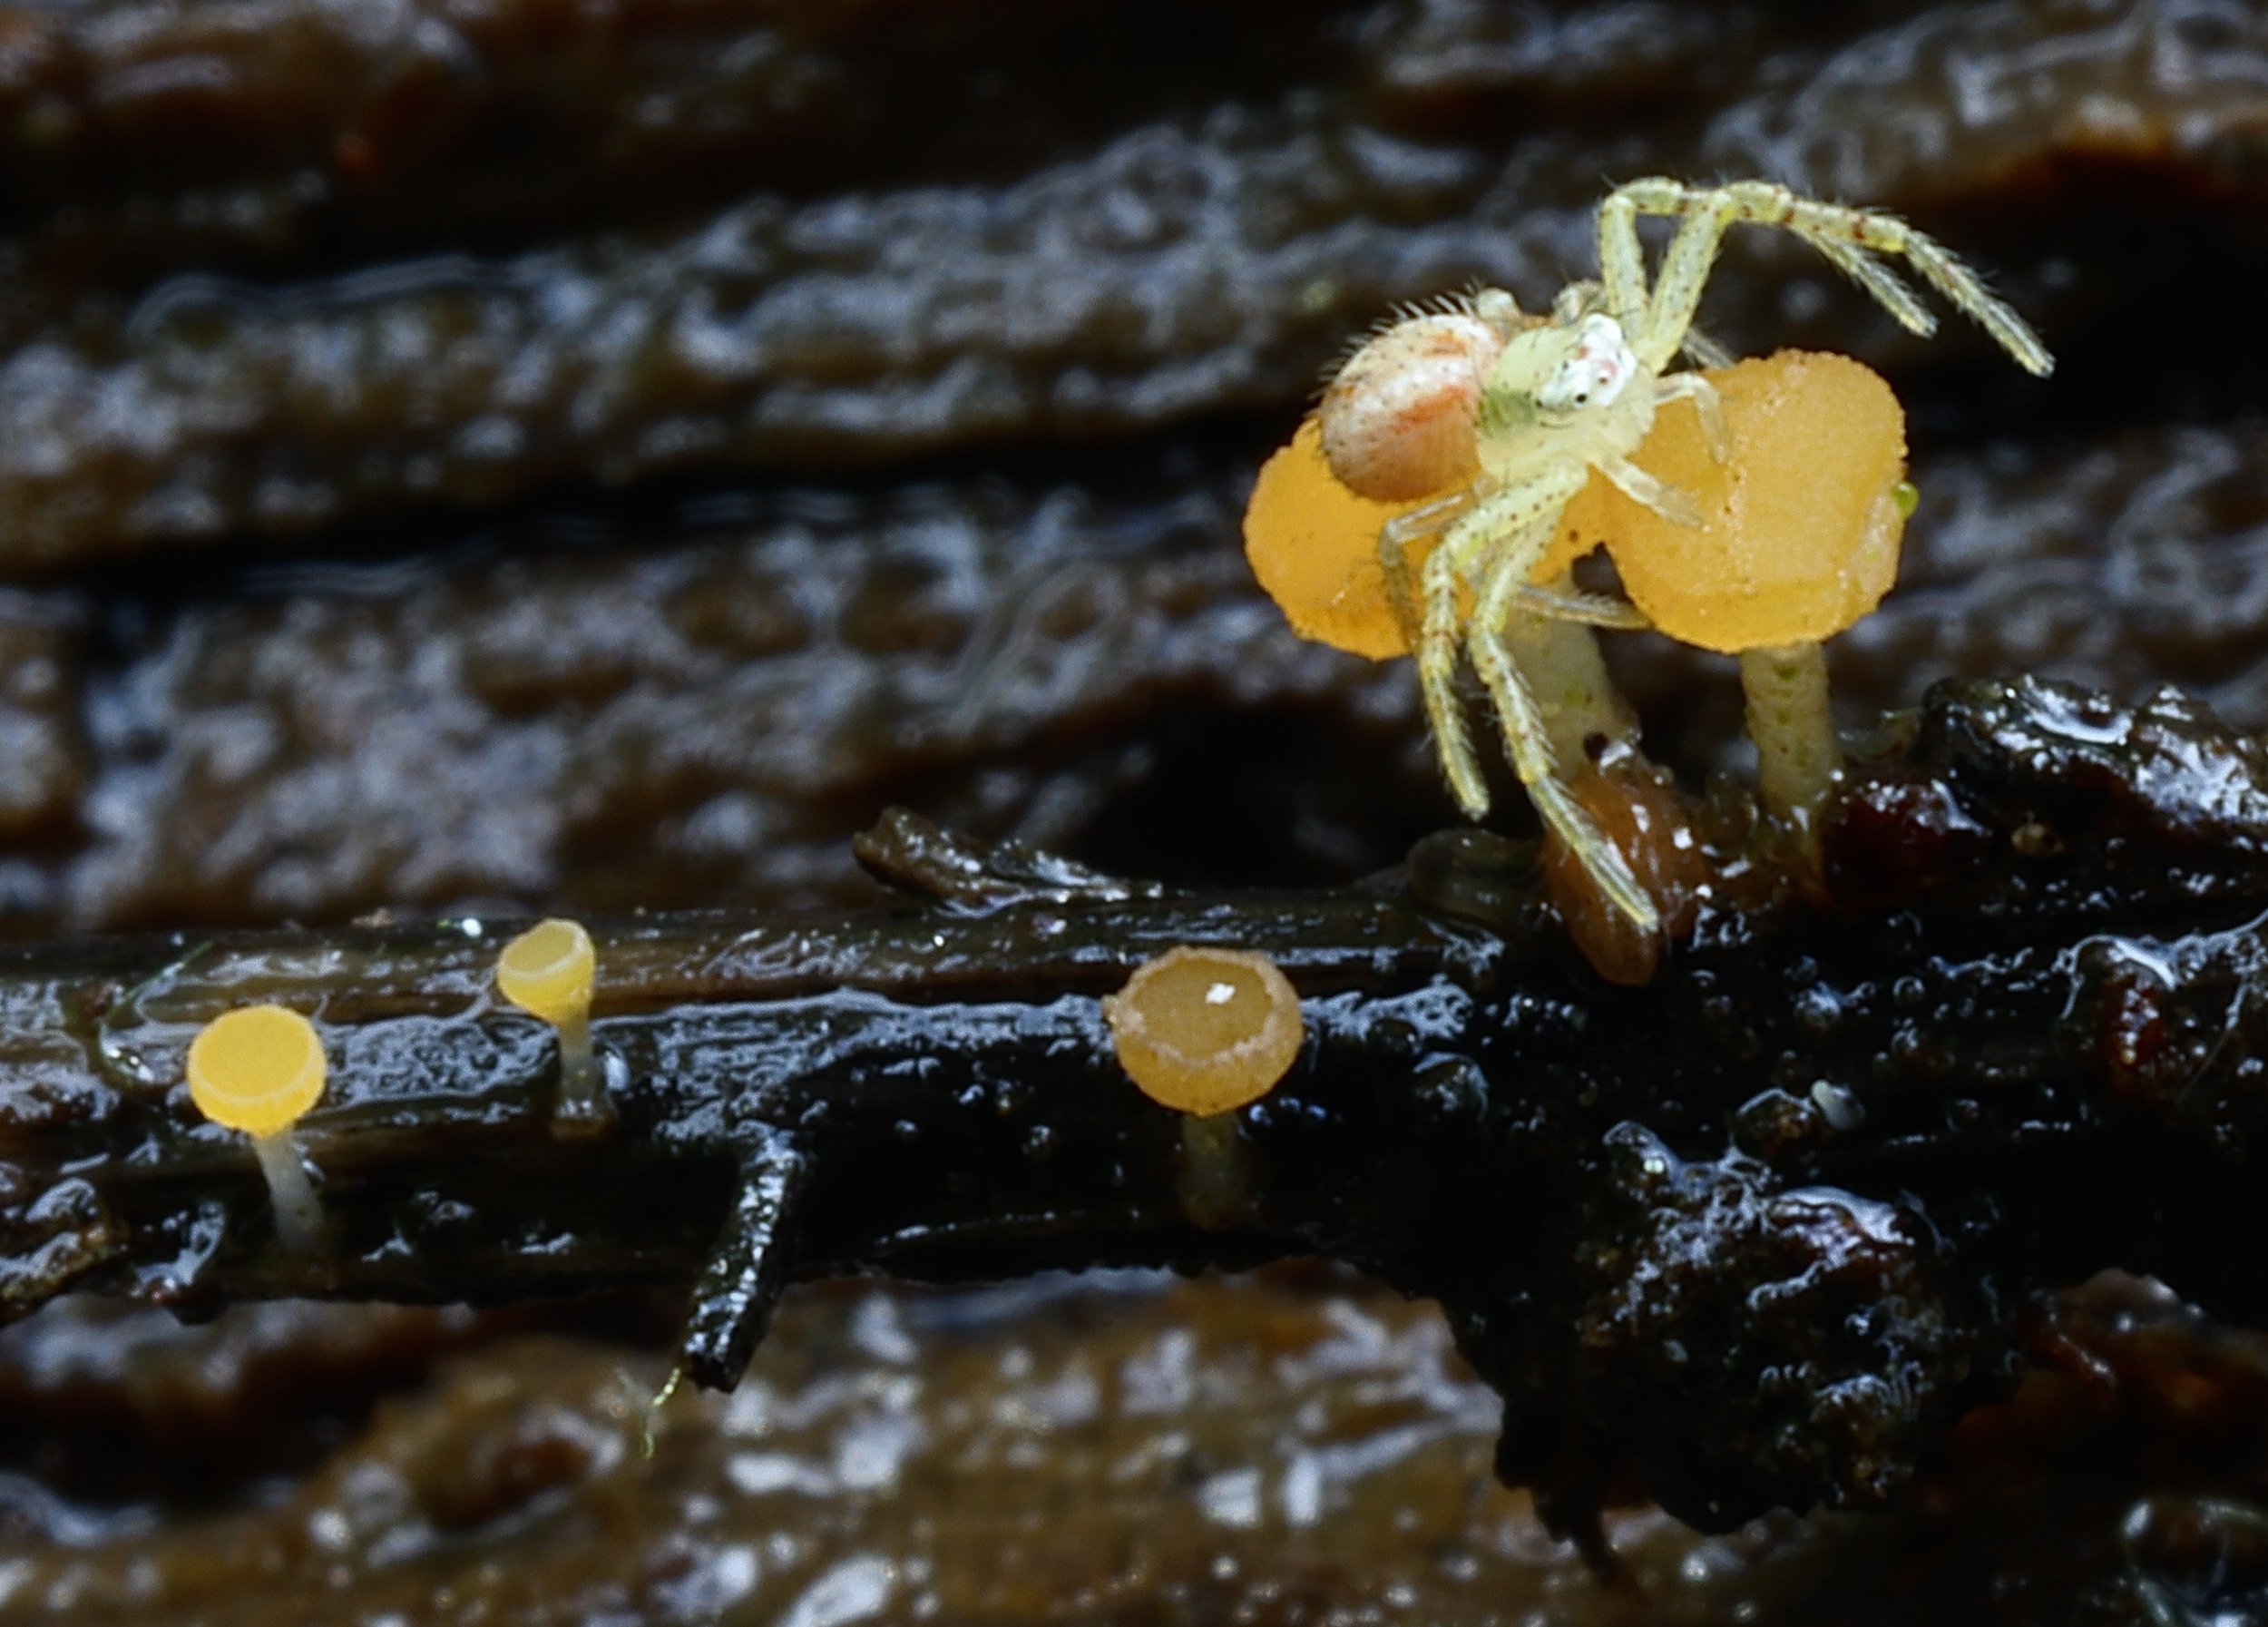 Chloroscypha sp. with Mecaphesa spider